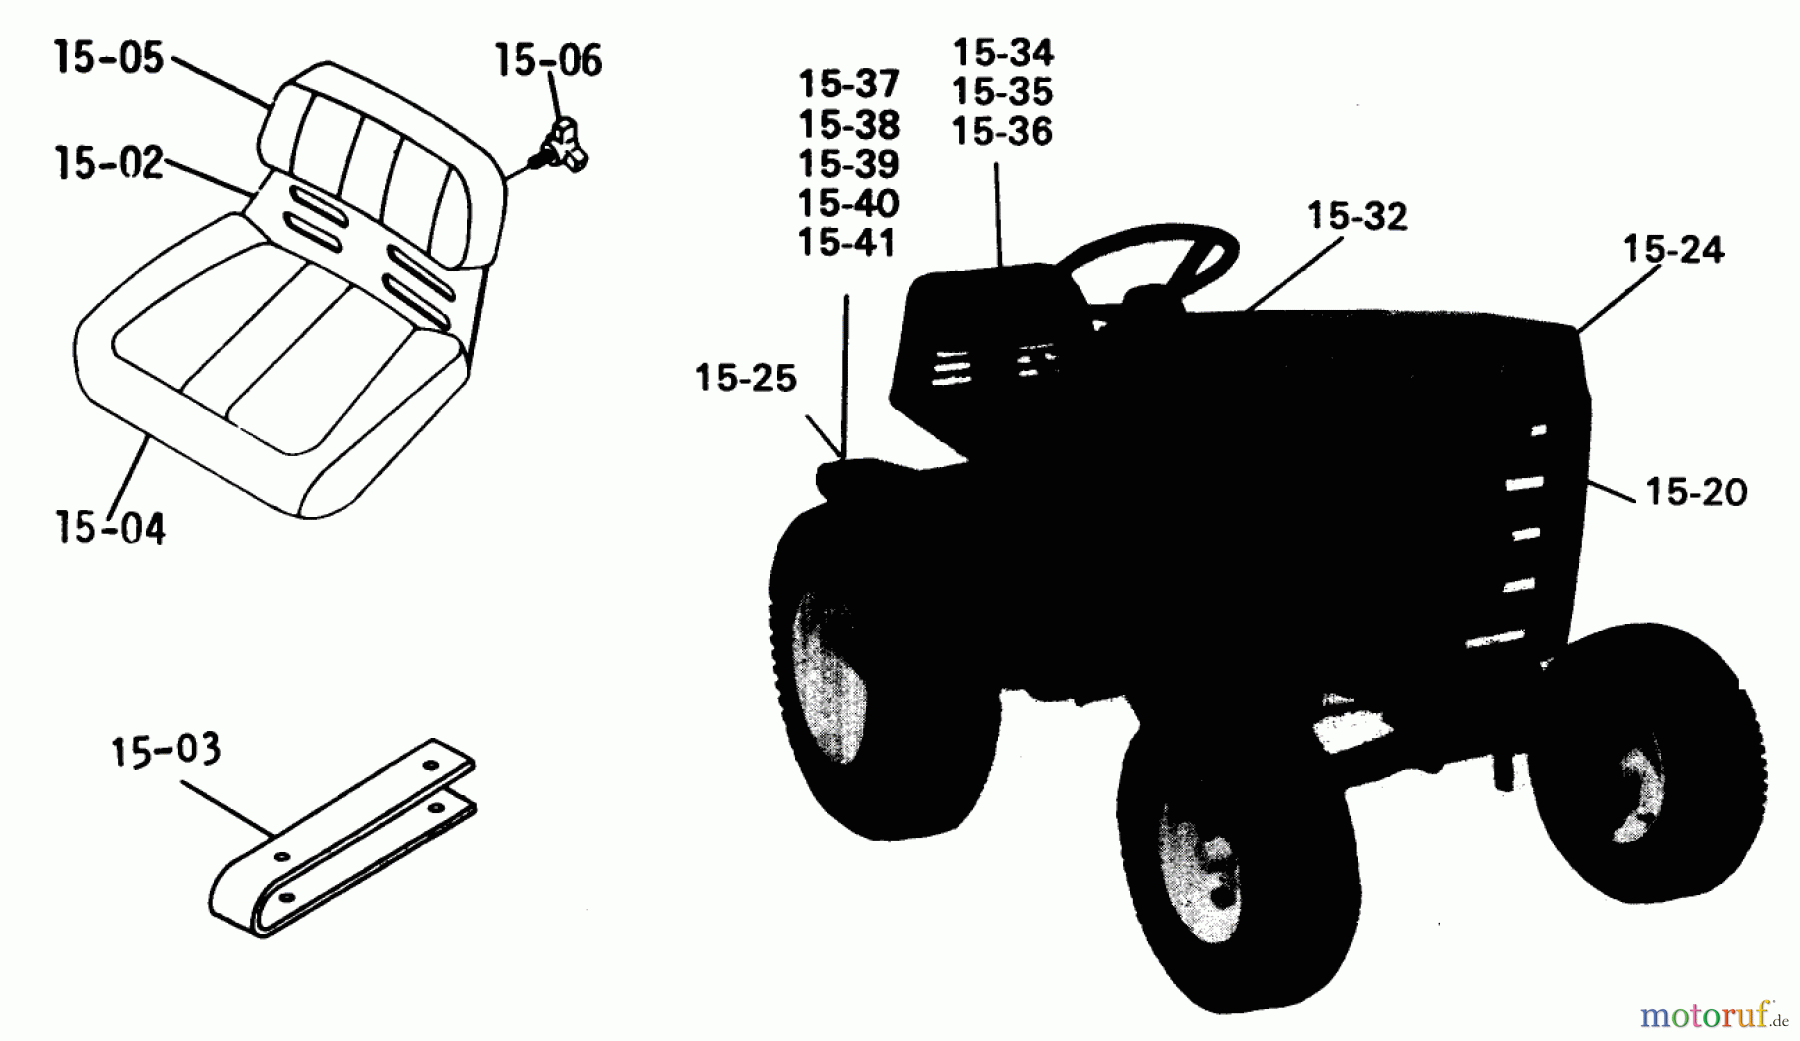  Toro Neu Mowers, Lawn & Garden Tractor Seite 1 1-0395 (C-120) - Toro C-120 8-Speed Tractor, 1975 15.000 SEATS, DECALS MISC. TRIM (FIG. 15)